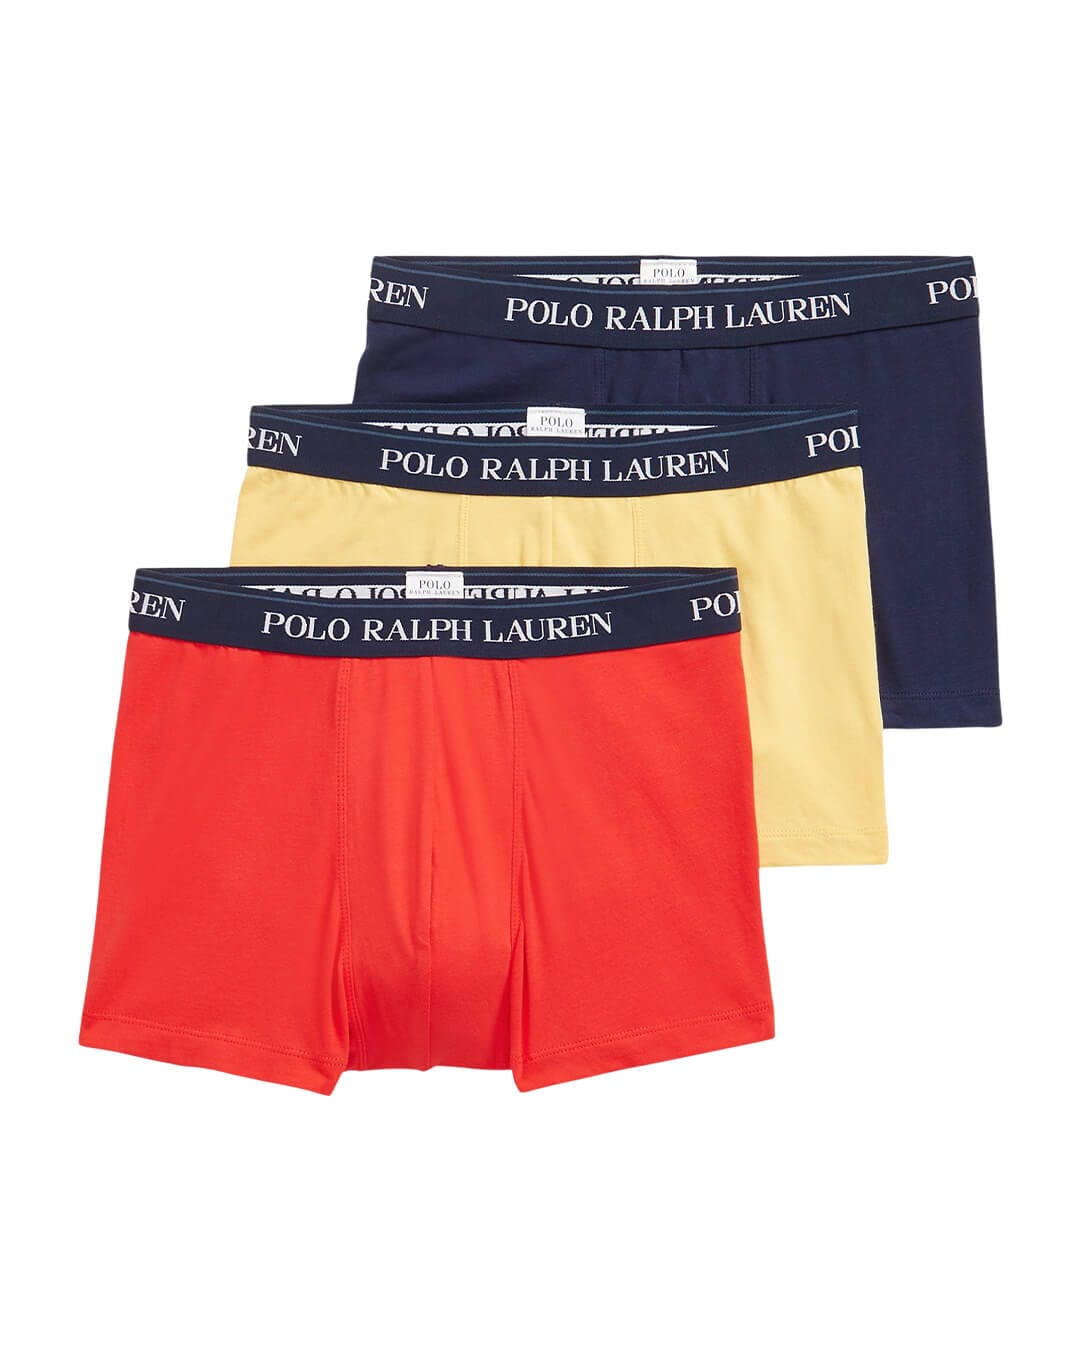 Polo Ralph Lauren Underwear Polo Ralph Lauren Classic Stretch Cotton Mix Trunk 3-Pack